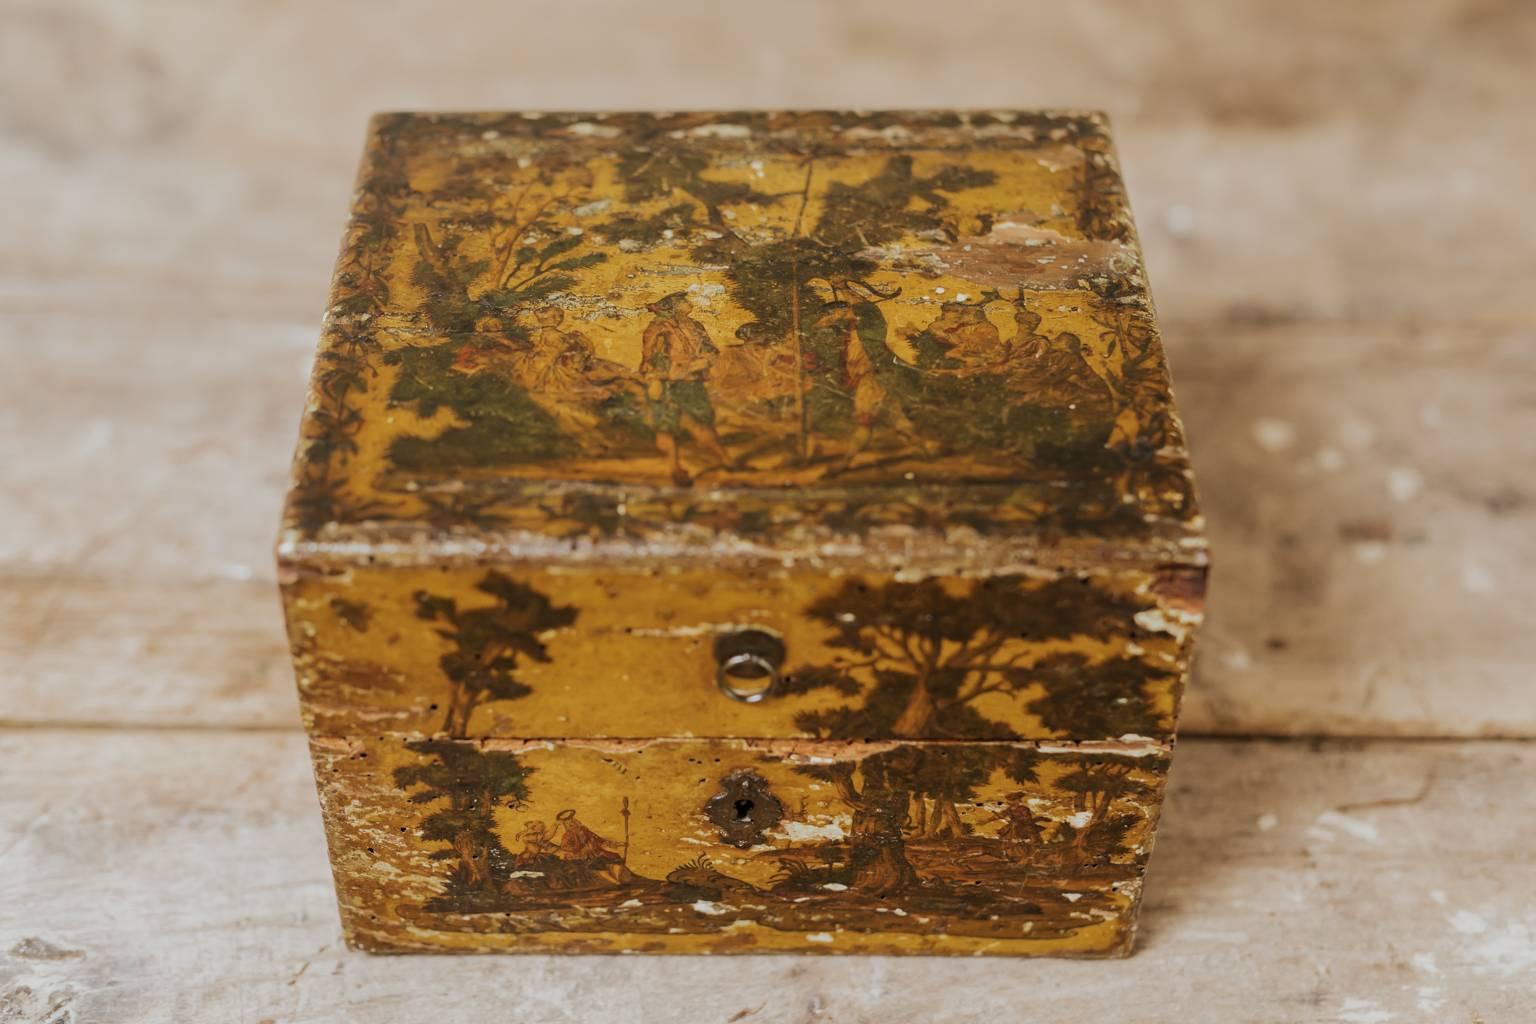 18th century jewelry box